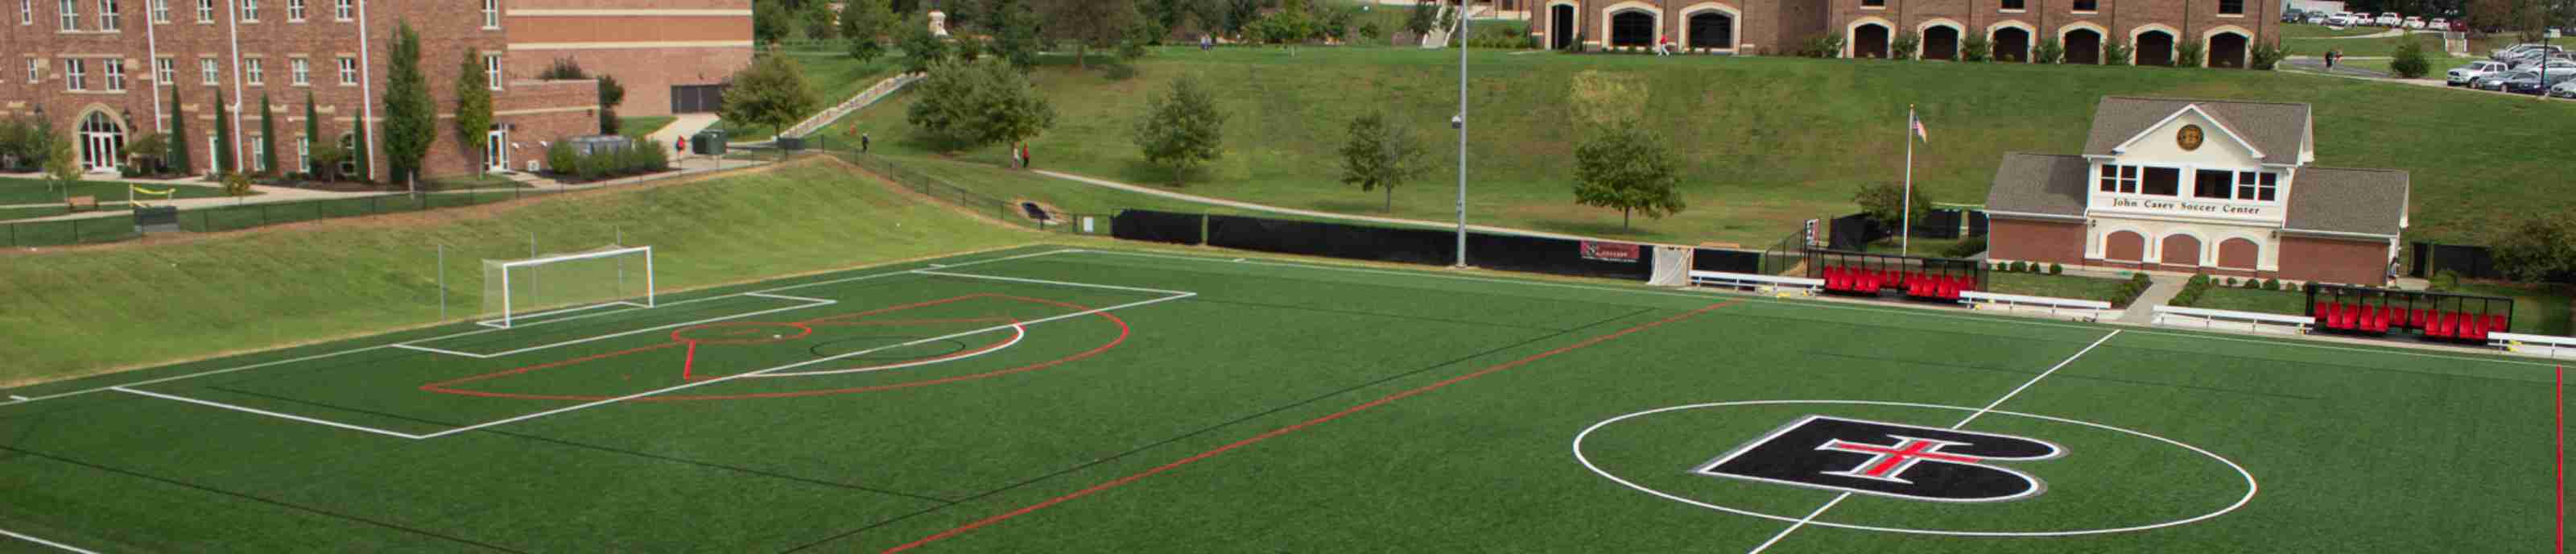 John Casey Soccer Center and Legacy Field